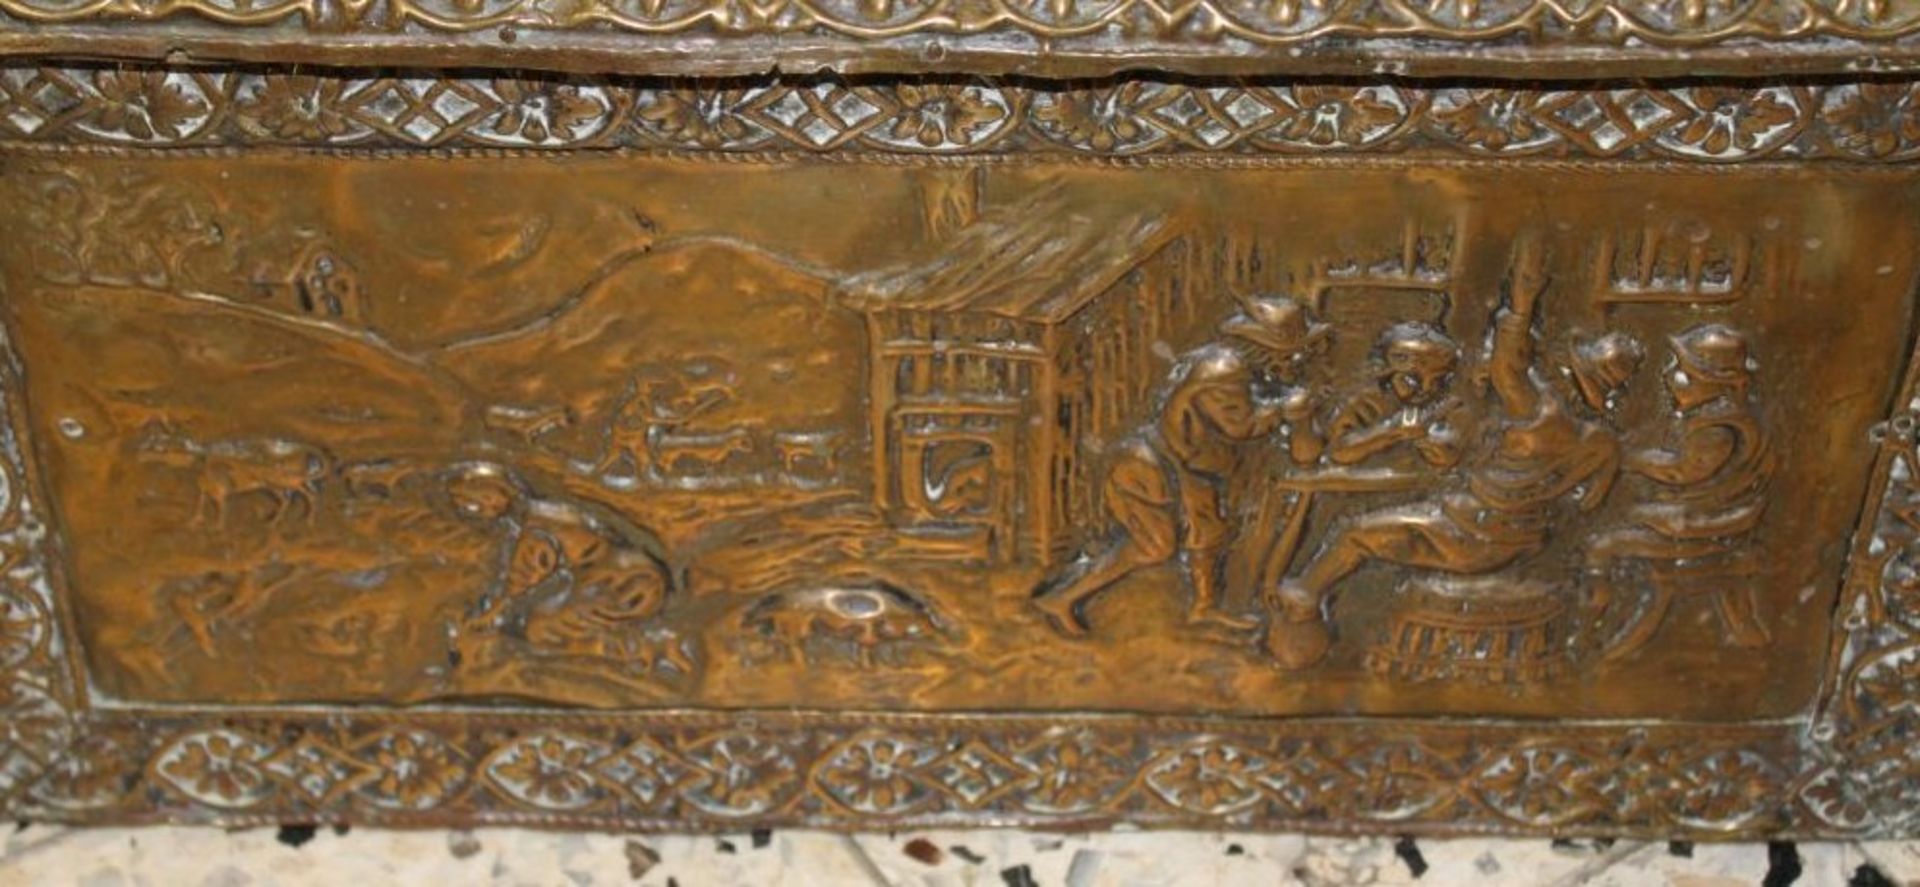 Kasten für Anfachholz / coal box, Messing über Holz, 1. H. 20. Jhd., England, H-35cm B-49cm T-34cm - Image 3 of 5